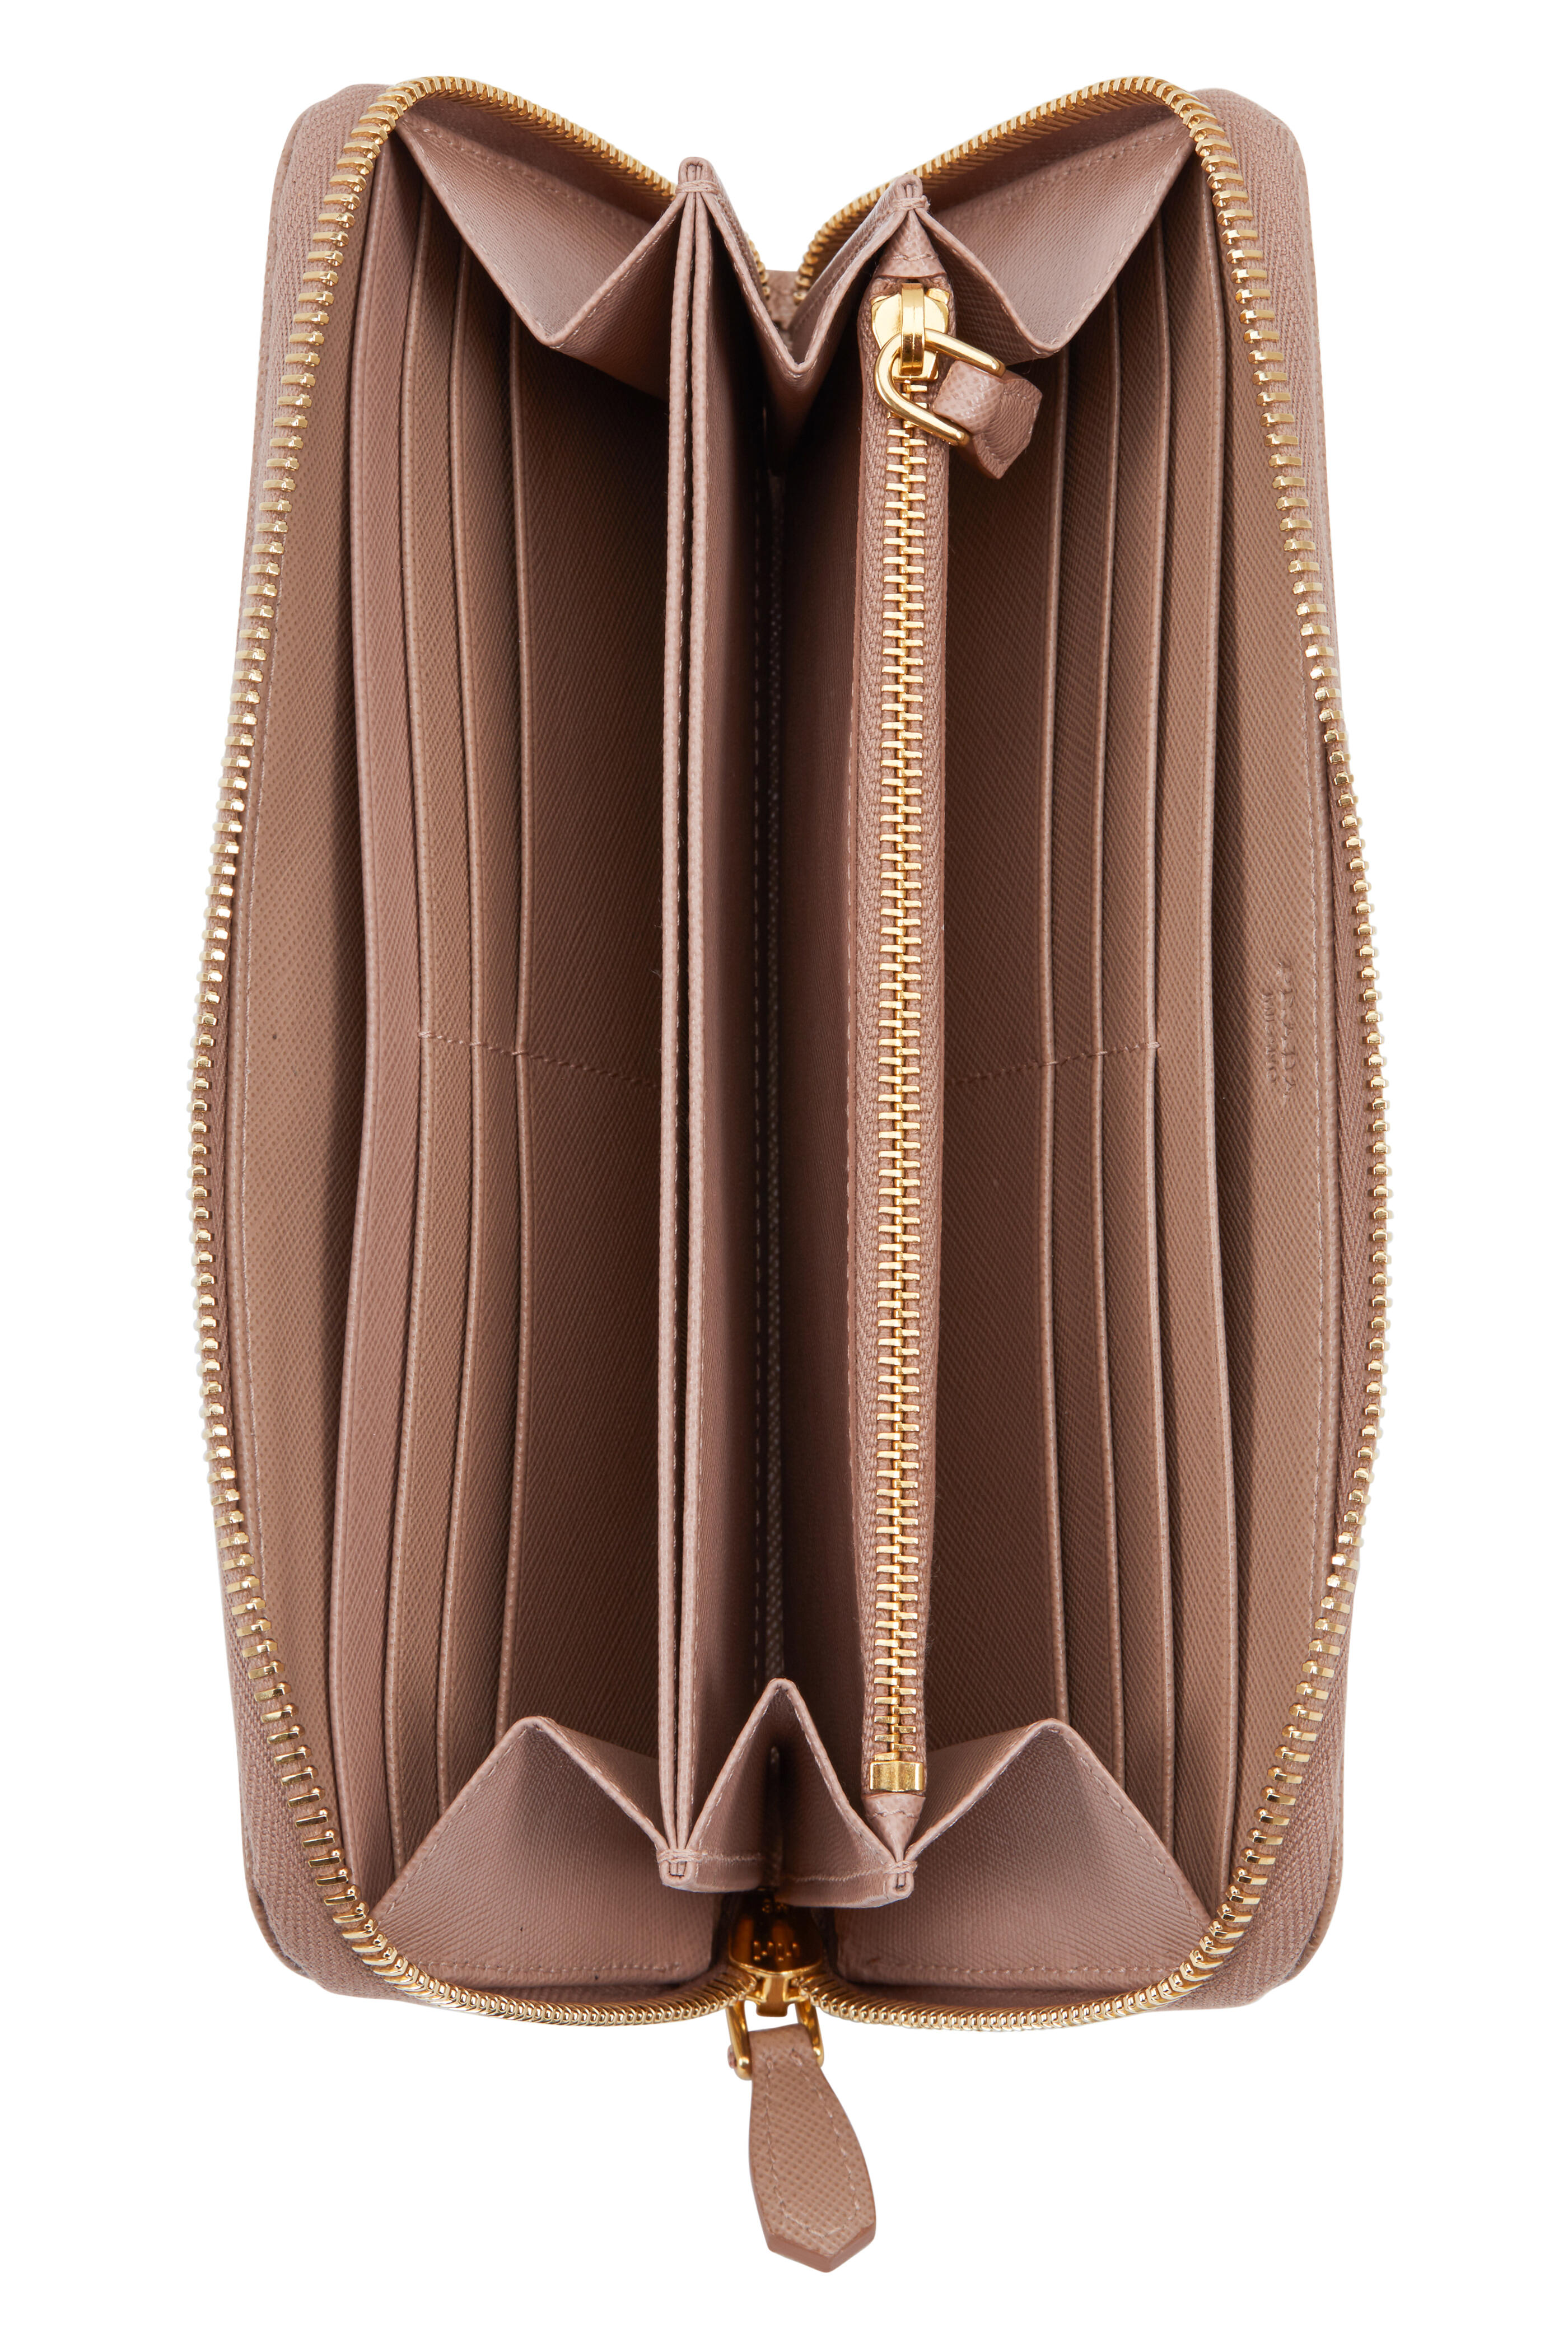 Prada Mauve Saffiano Leather Zip Around Women's Wallets